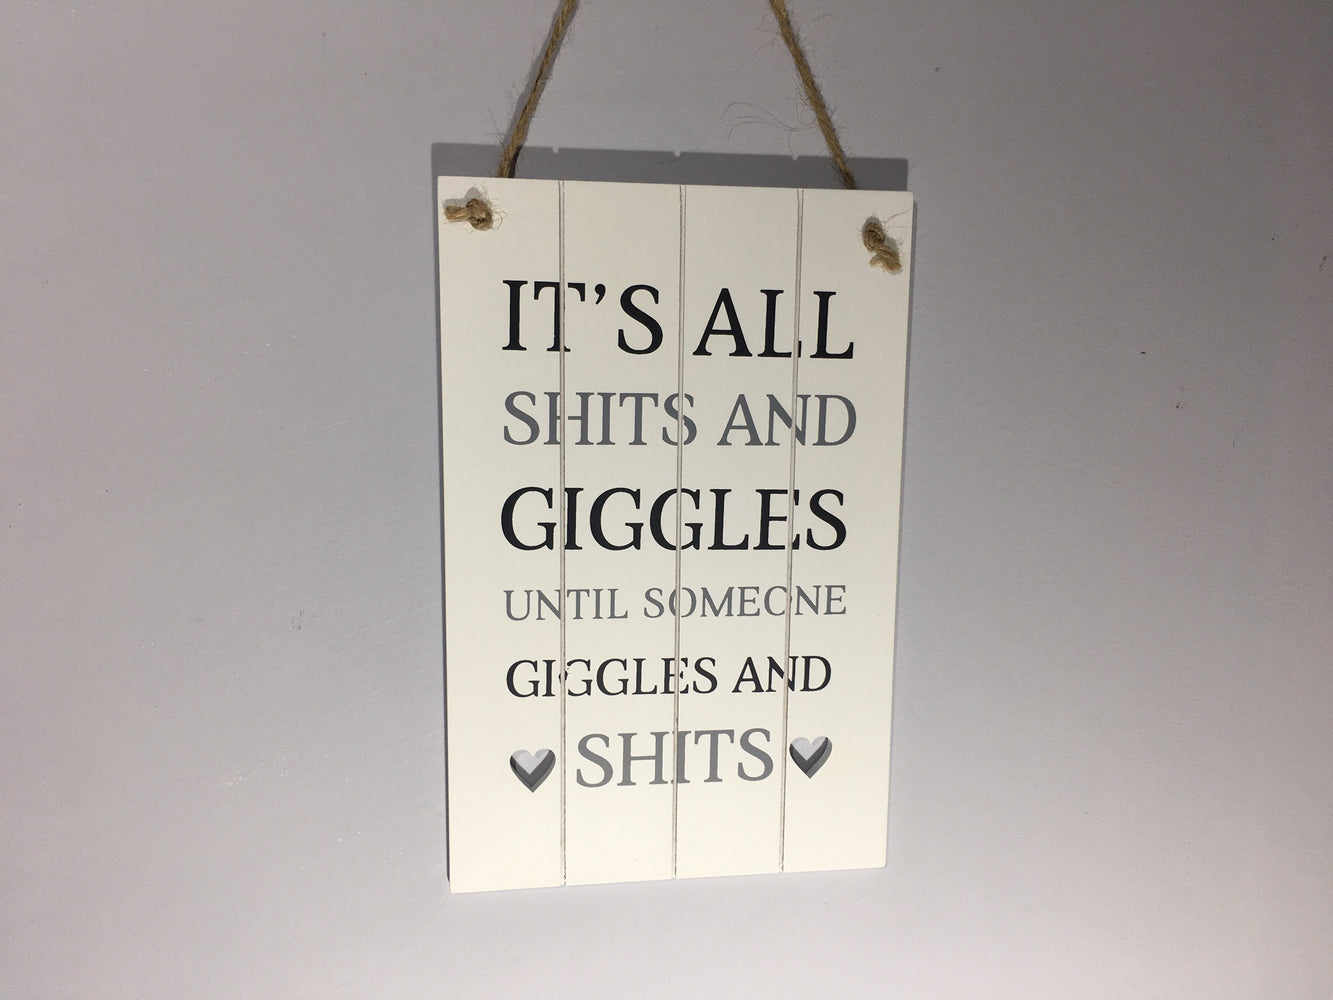 Shits and Giggles